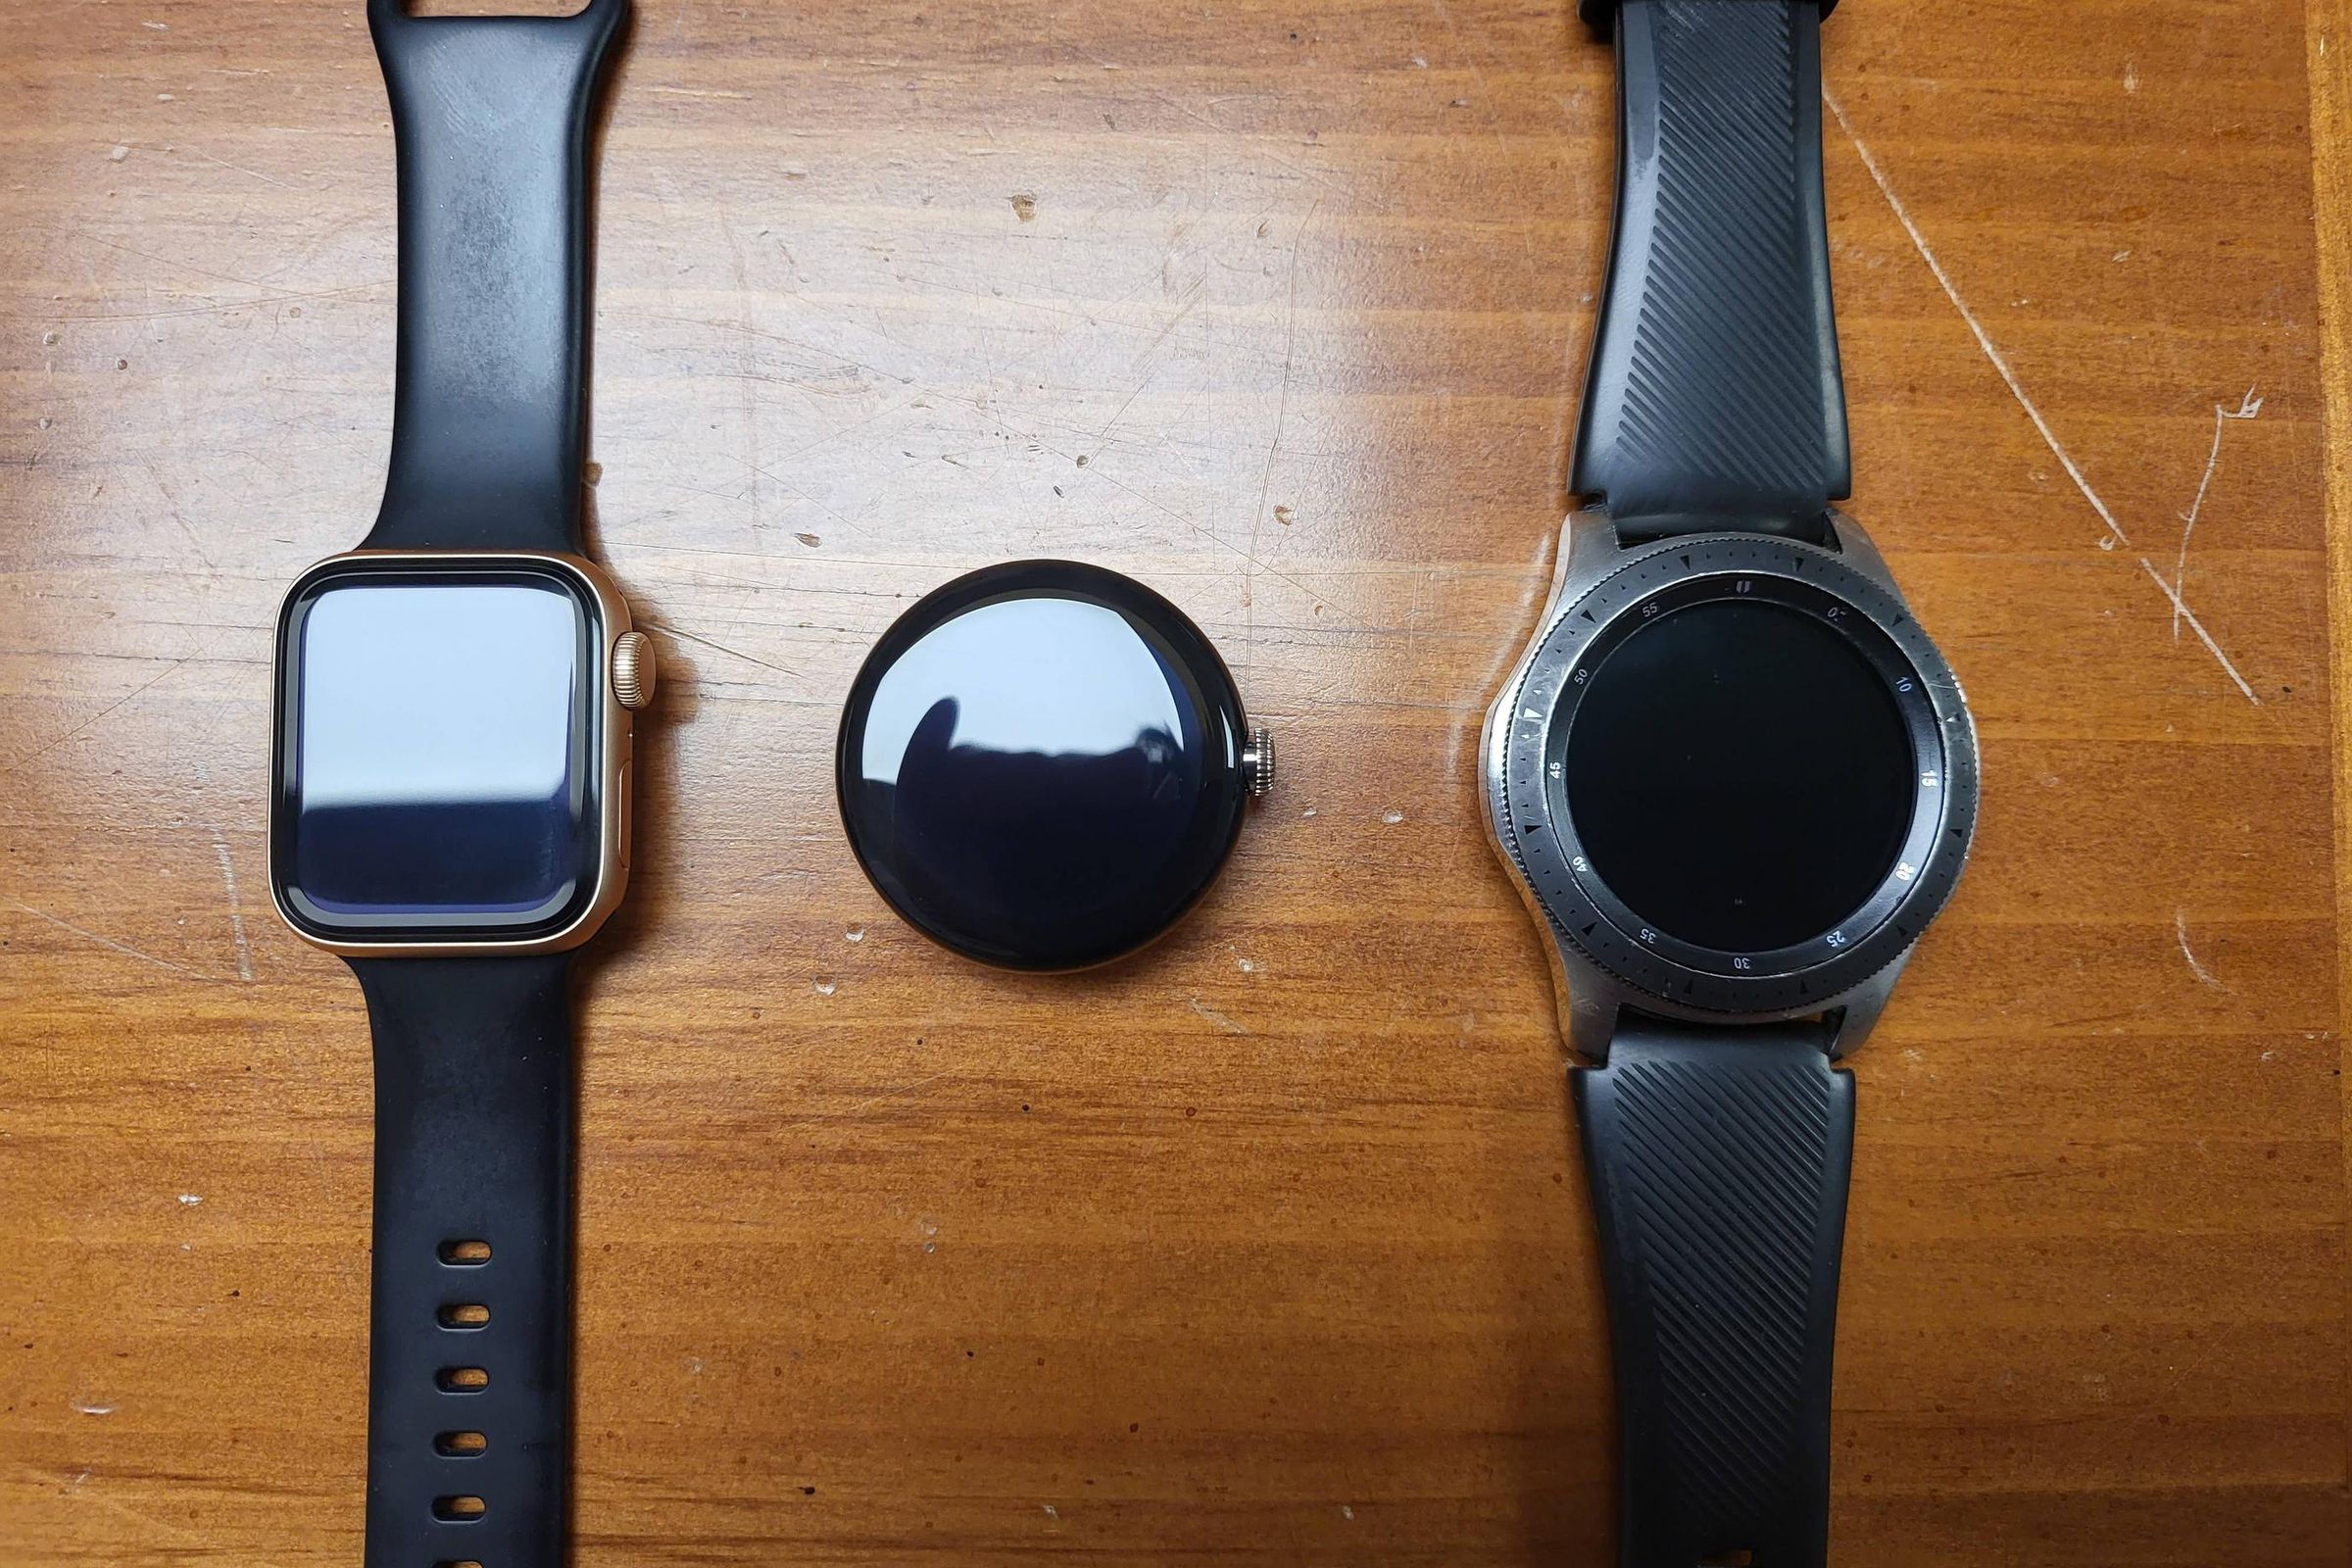 Pixel Watch between a 40mm Apple Watch (left) and 46mm Samsung Galaxy Watch.